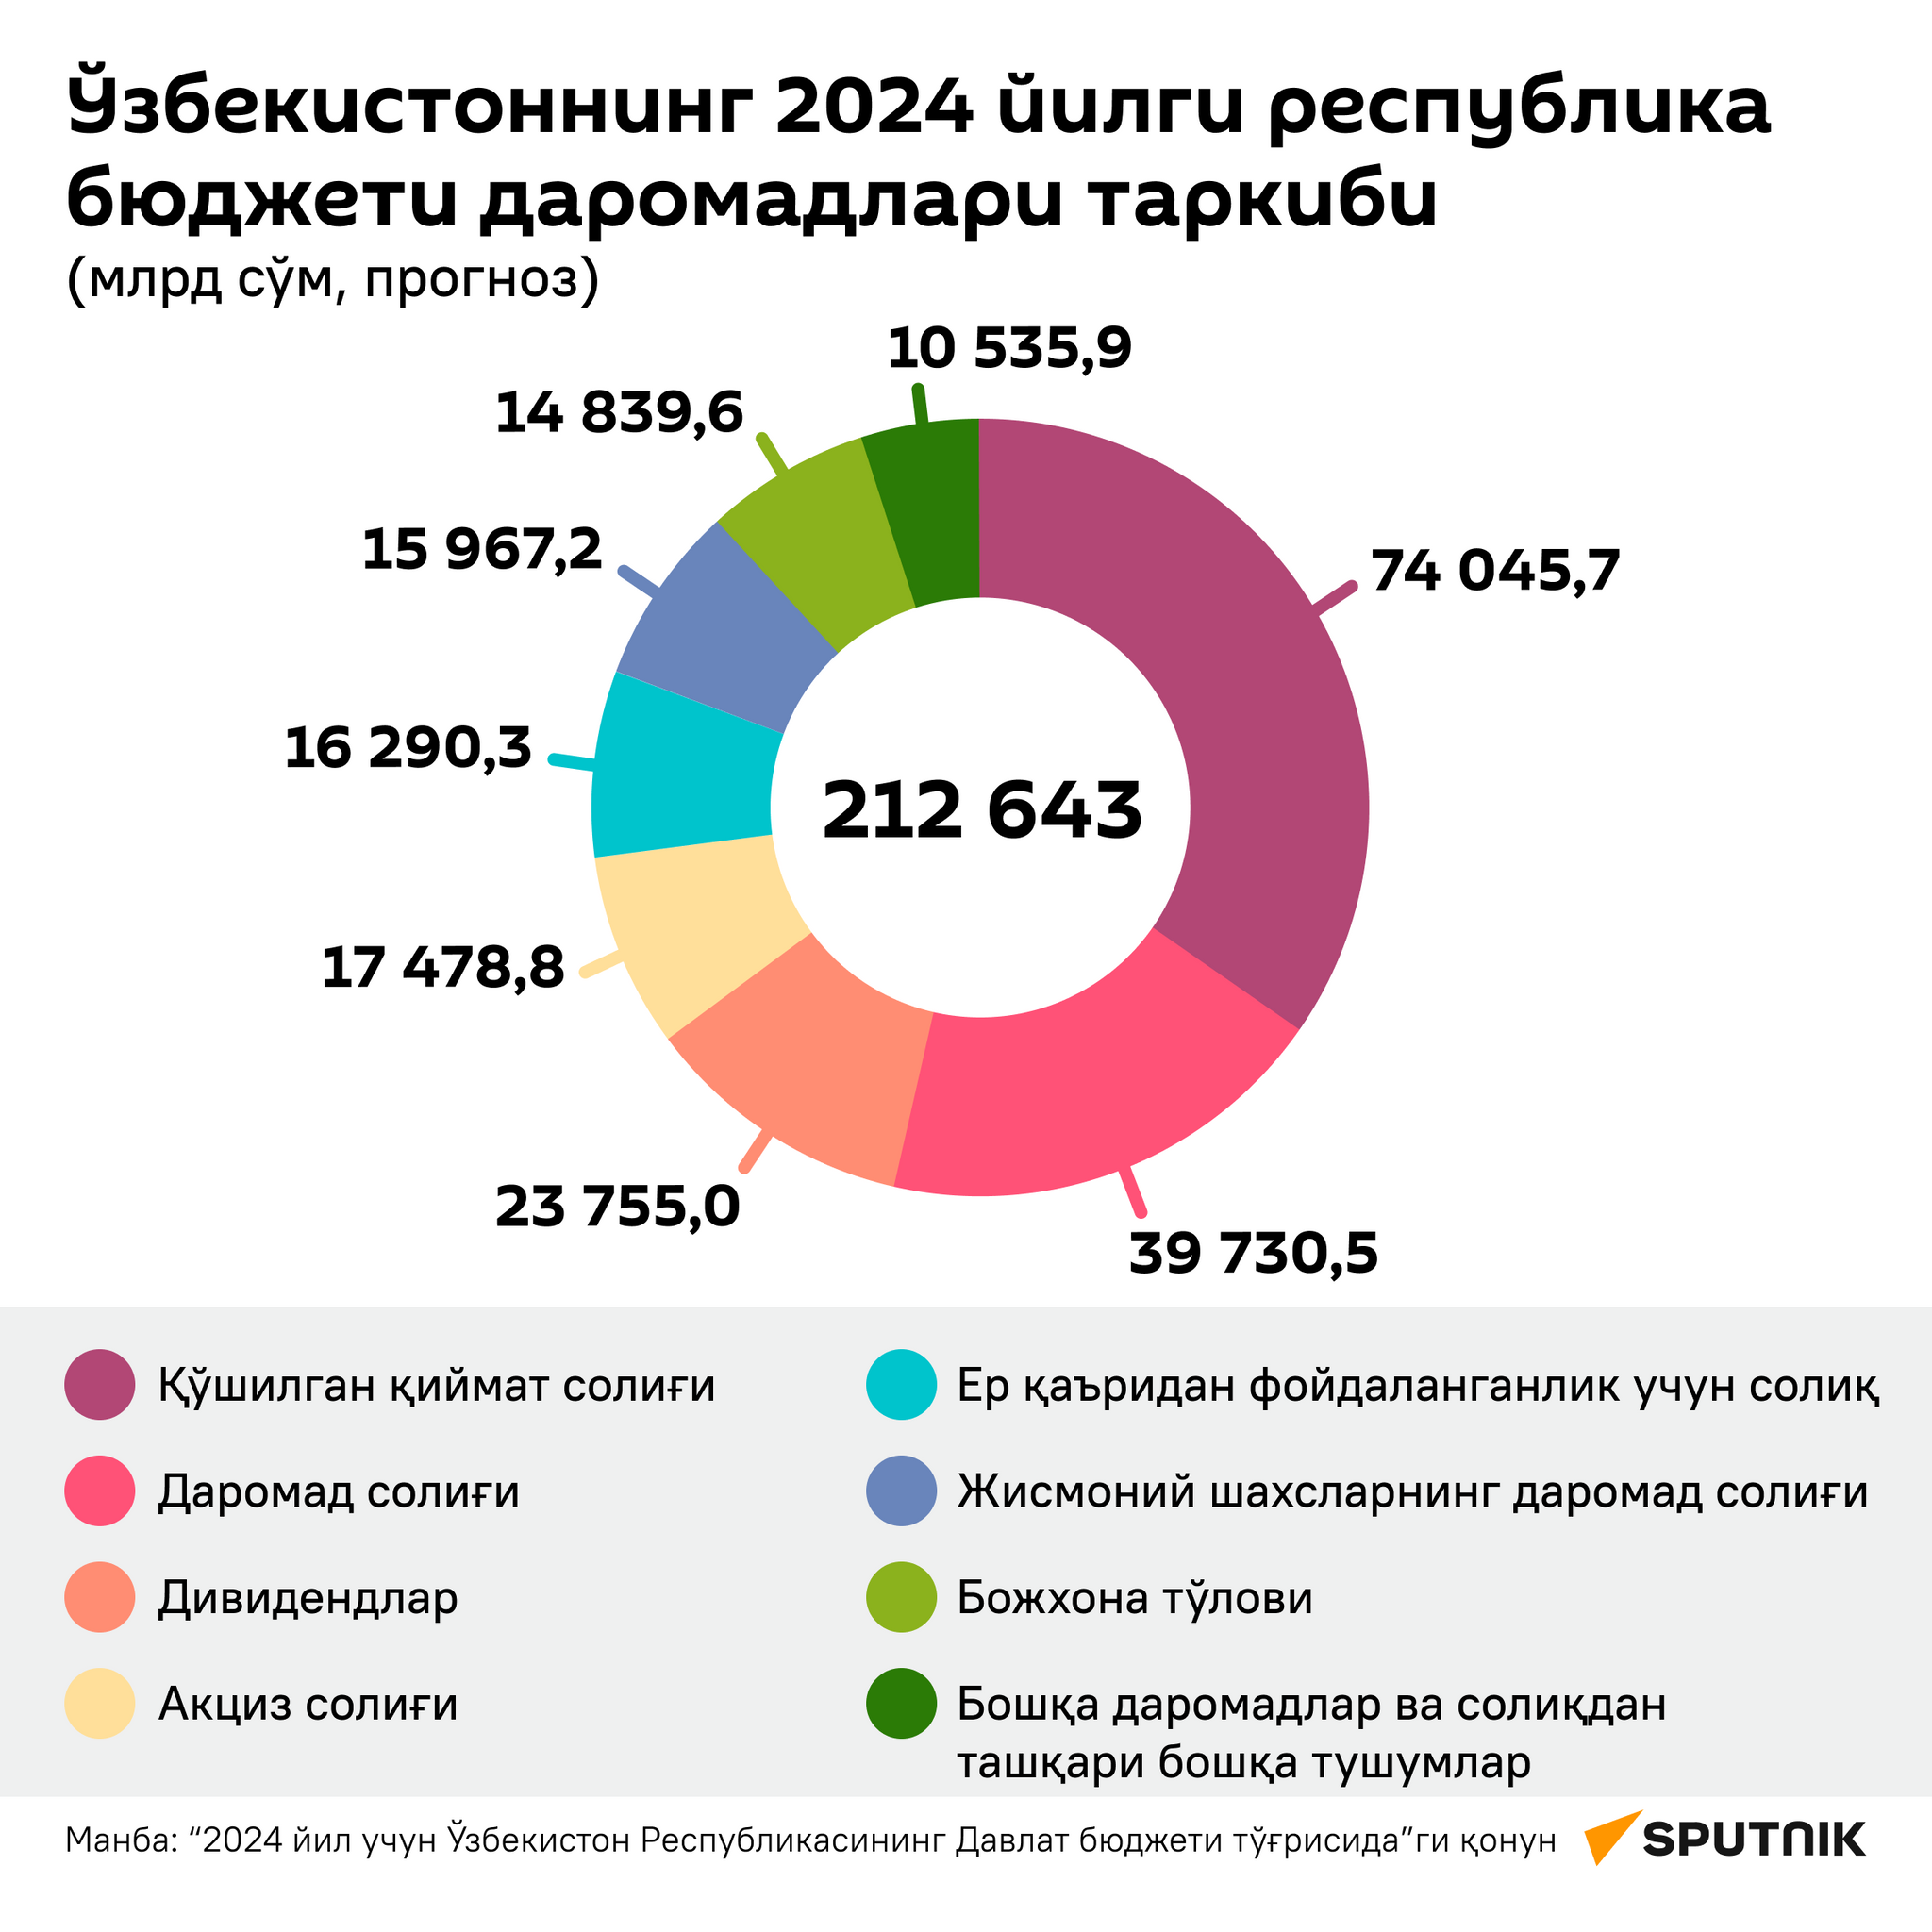 Ўзбекистон 2024 йилги давлат бюджети даромадлари прогнози таркиби - Sputnik Ўзбекистон